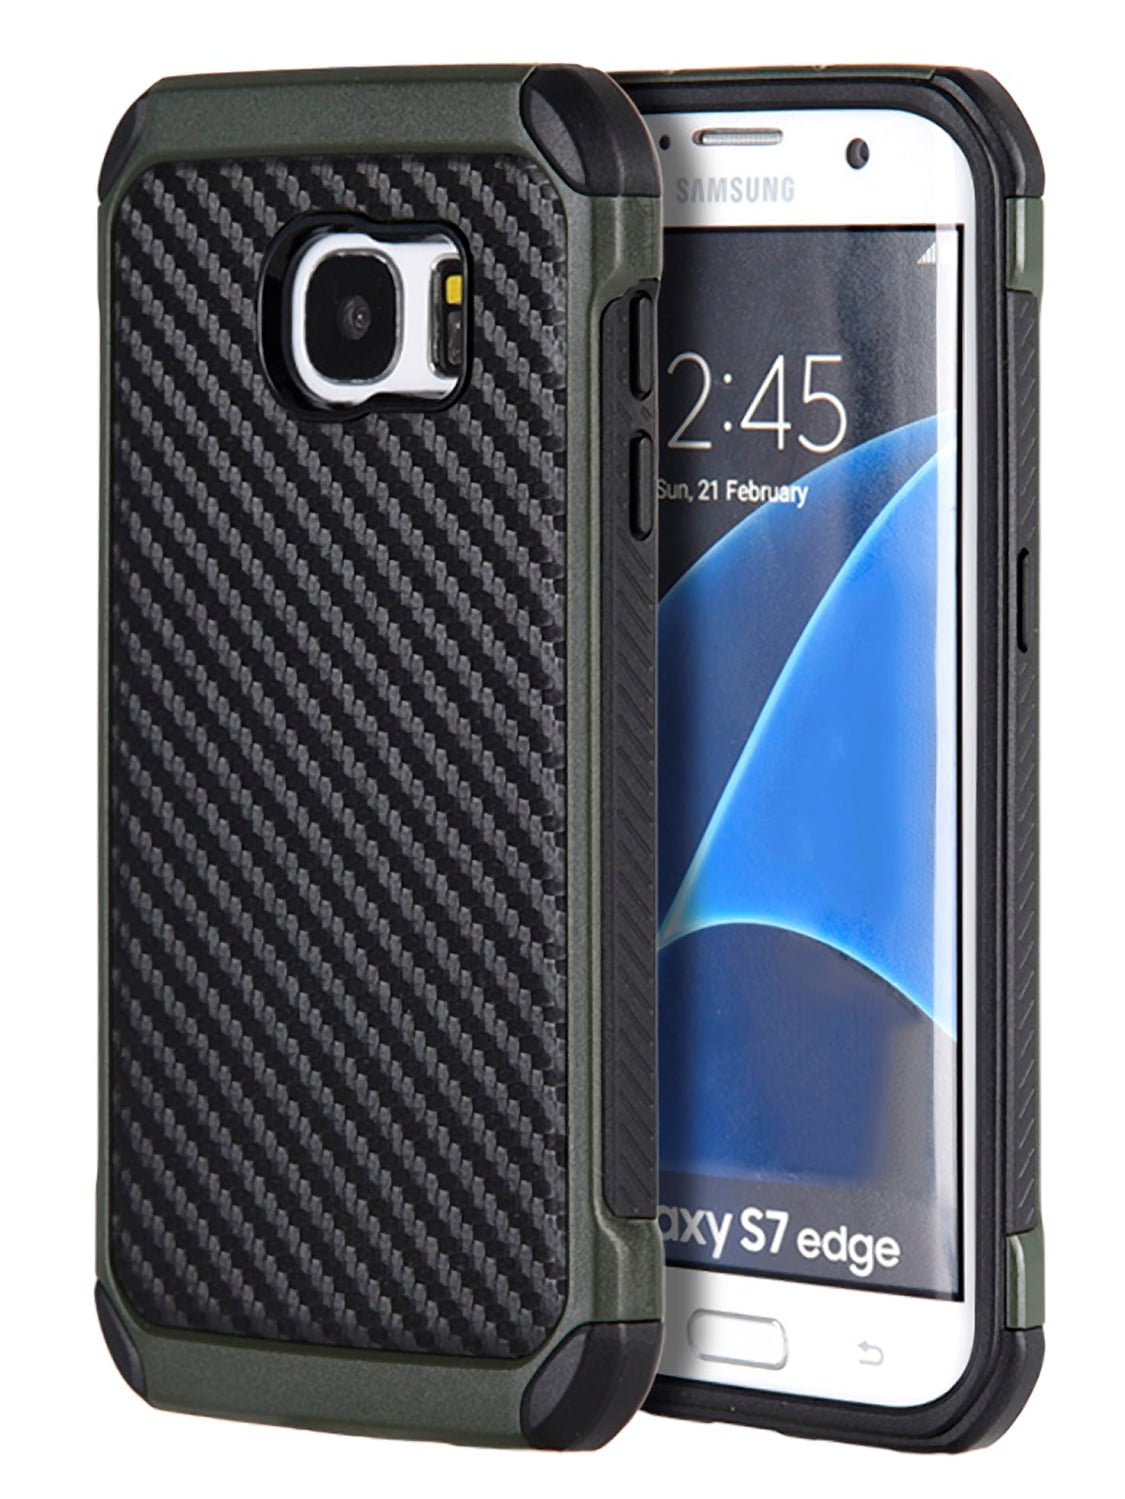 Samsung Galaxy S7 Edge Hybrid Case Black Blue Pc With Carbon Finish Walmart.com